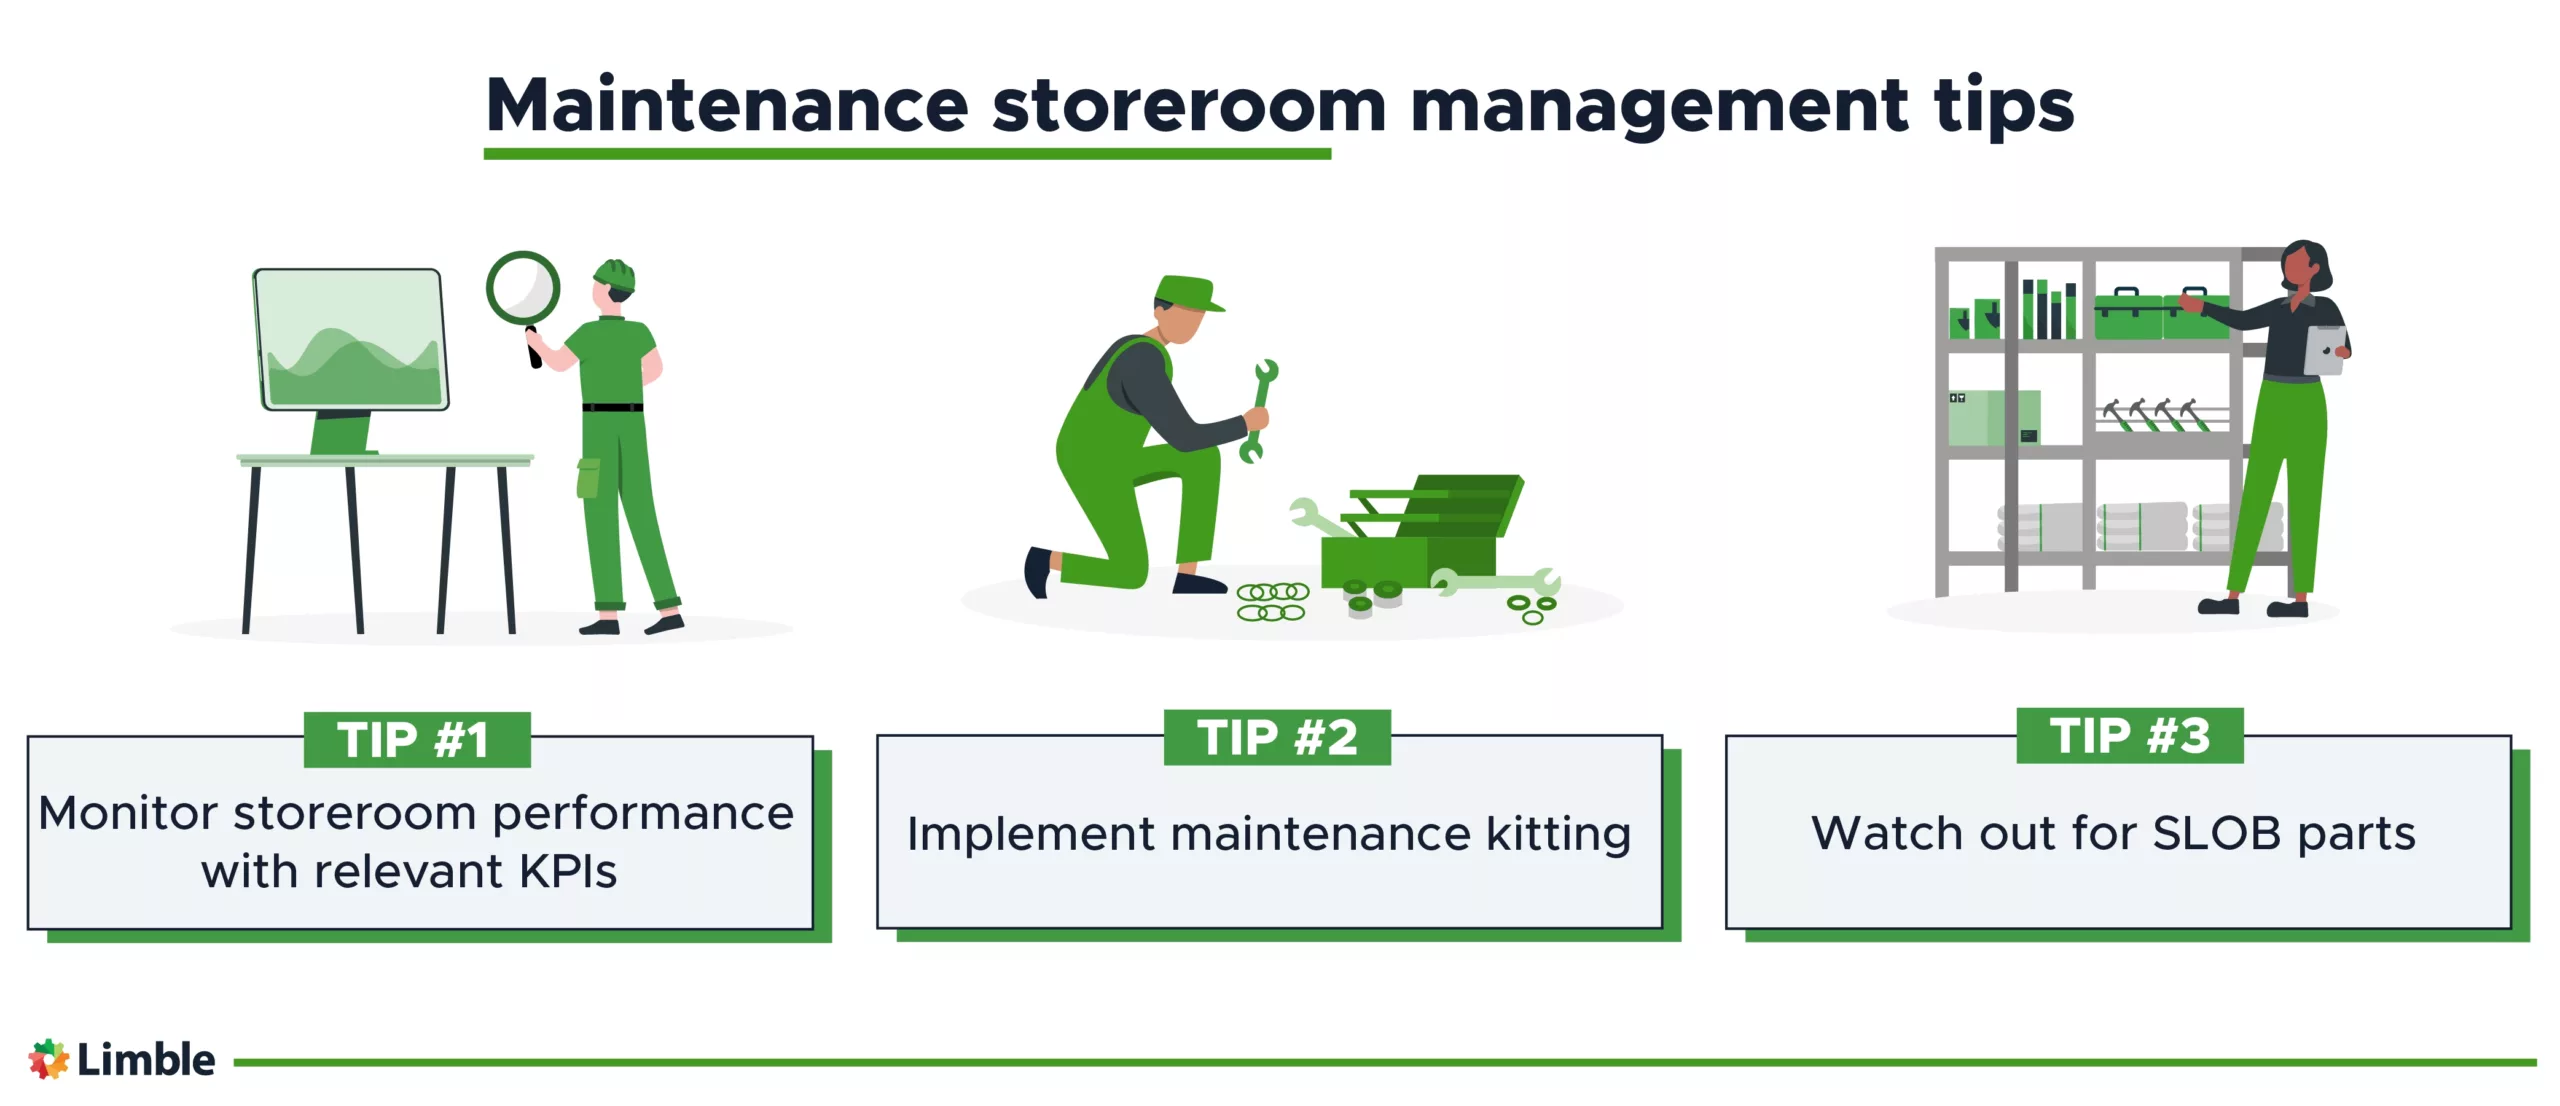 Three tips for improving maintenance storeroom management.